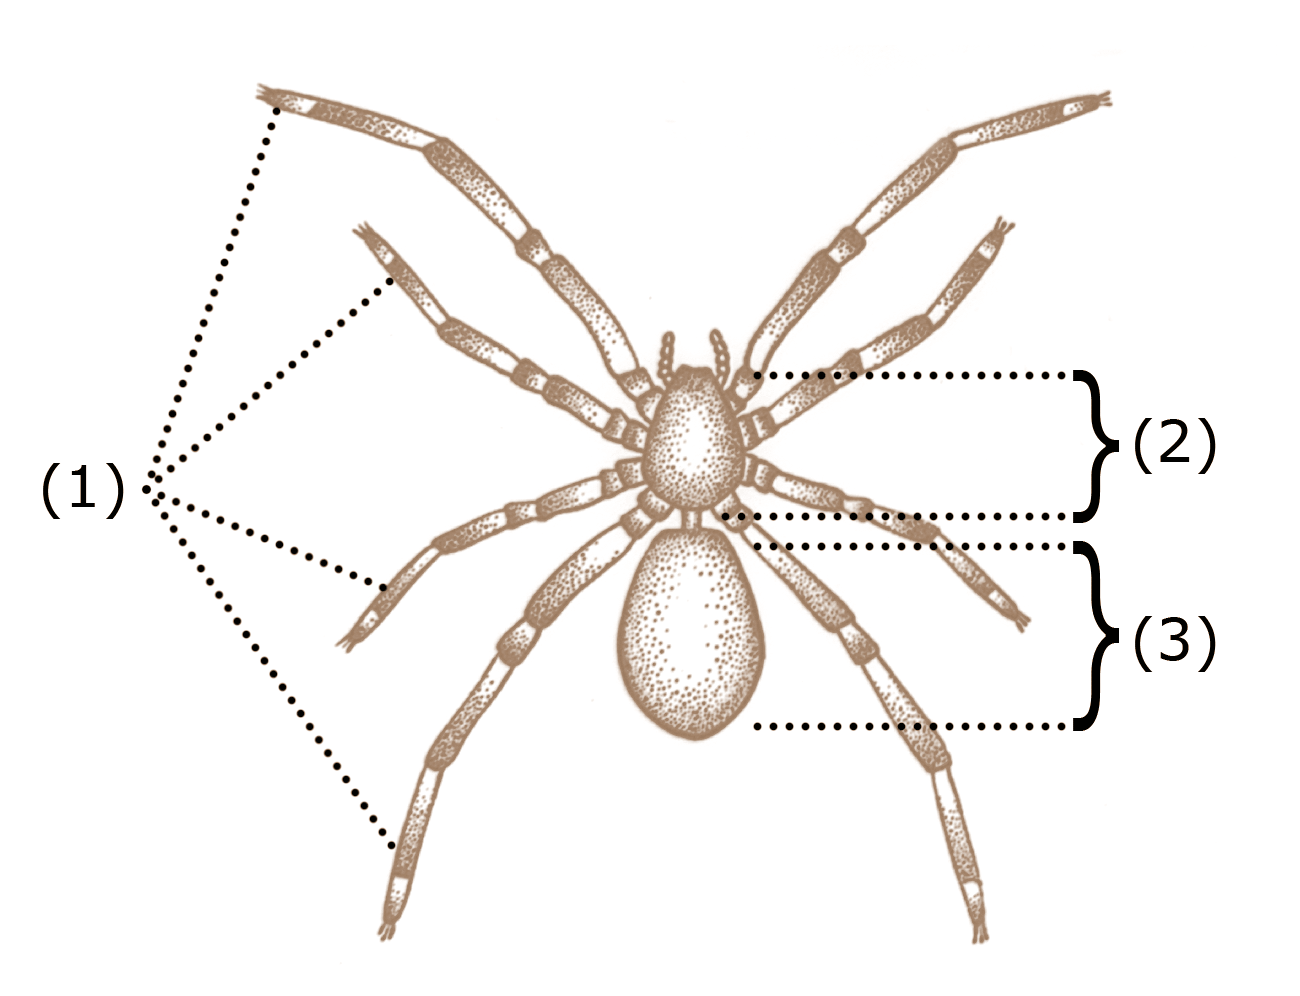 Anatomy Of A Spider